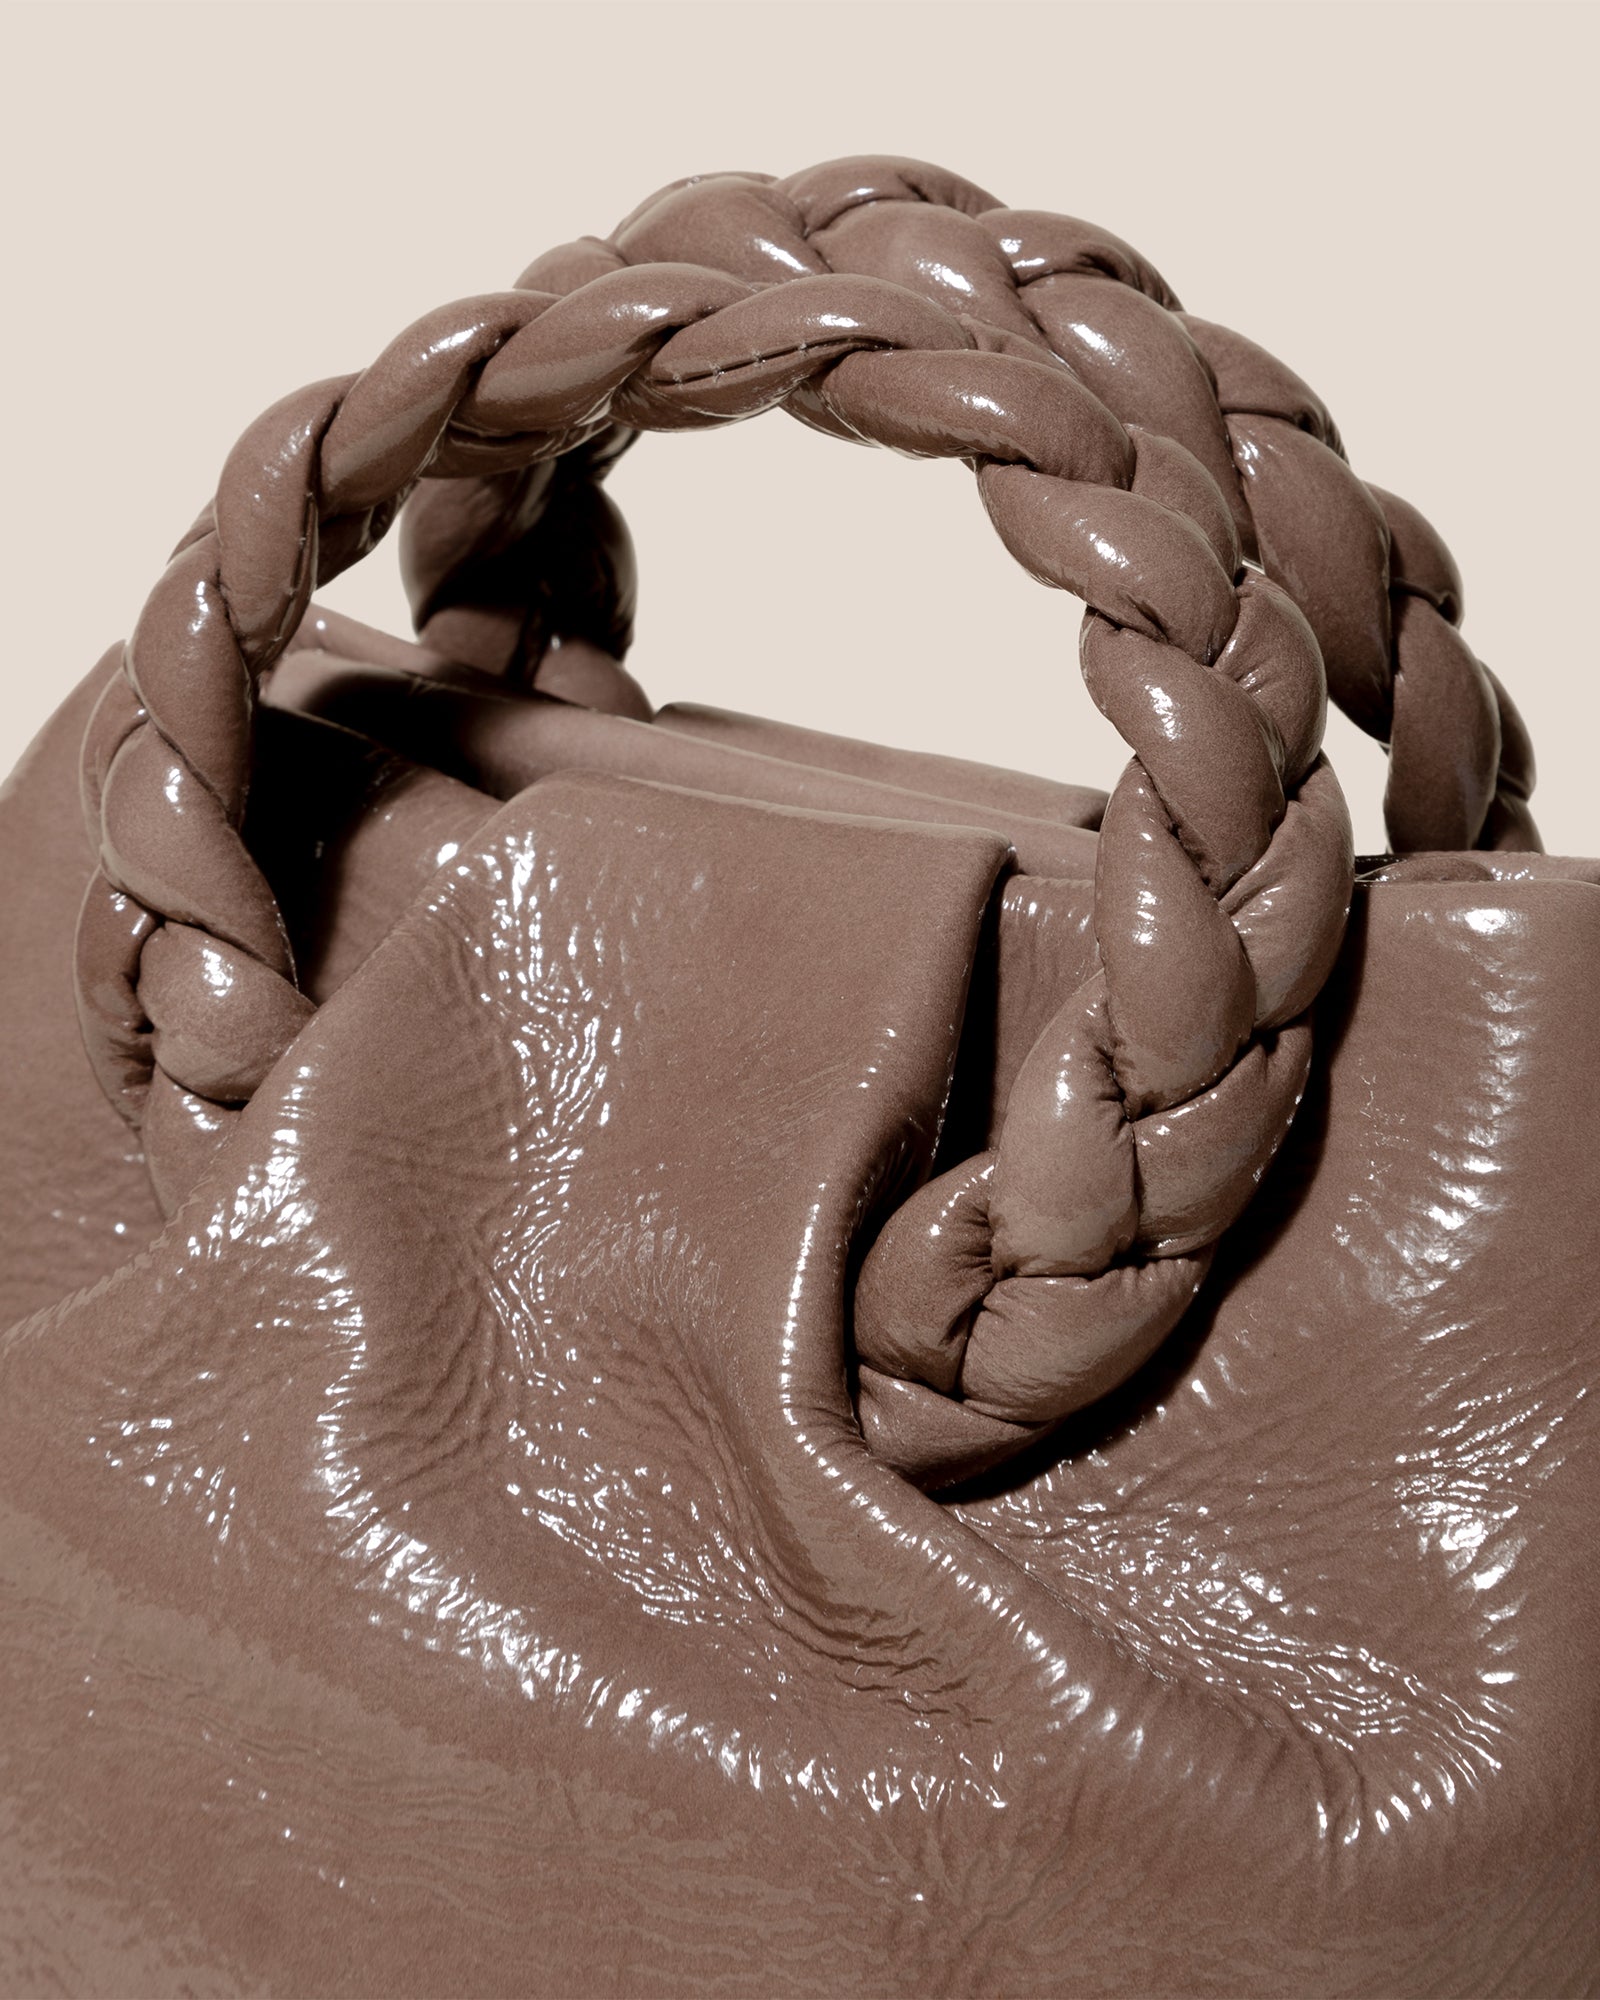 bombon braided leather